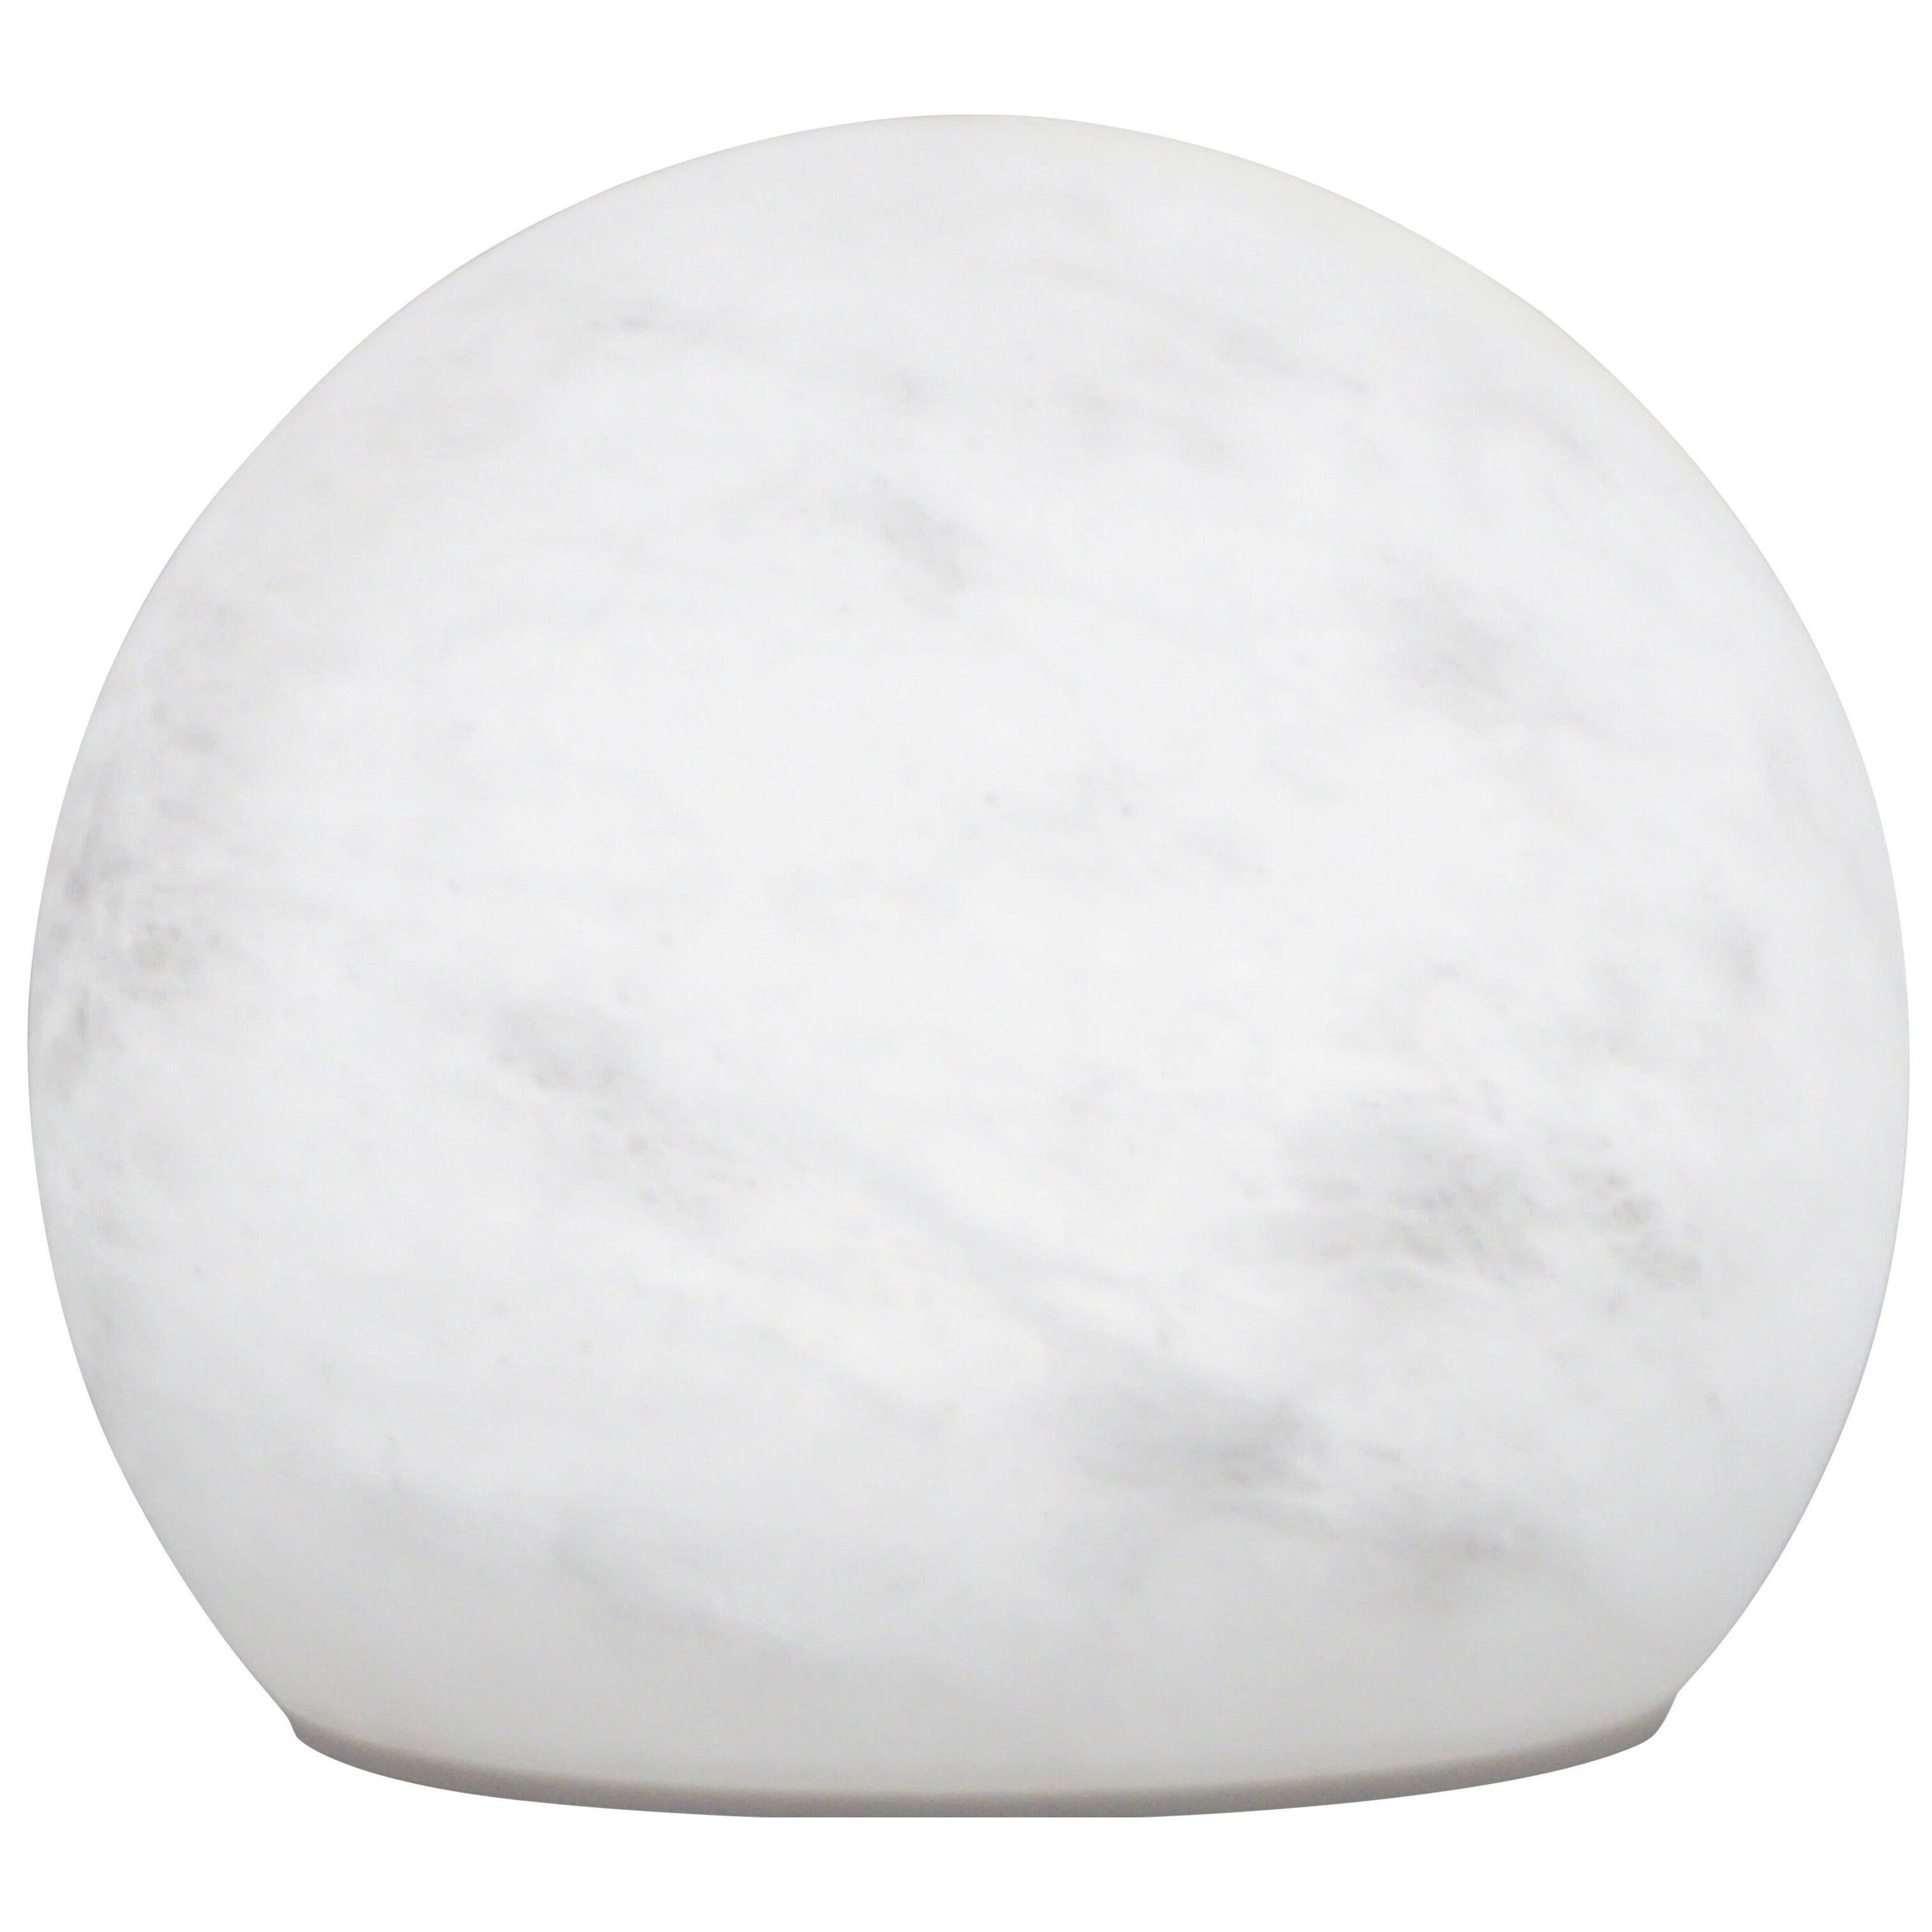 Bespoke Italian Minimalist White Alabaster Moon Wireless Round Table/Desk Lamp